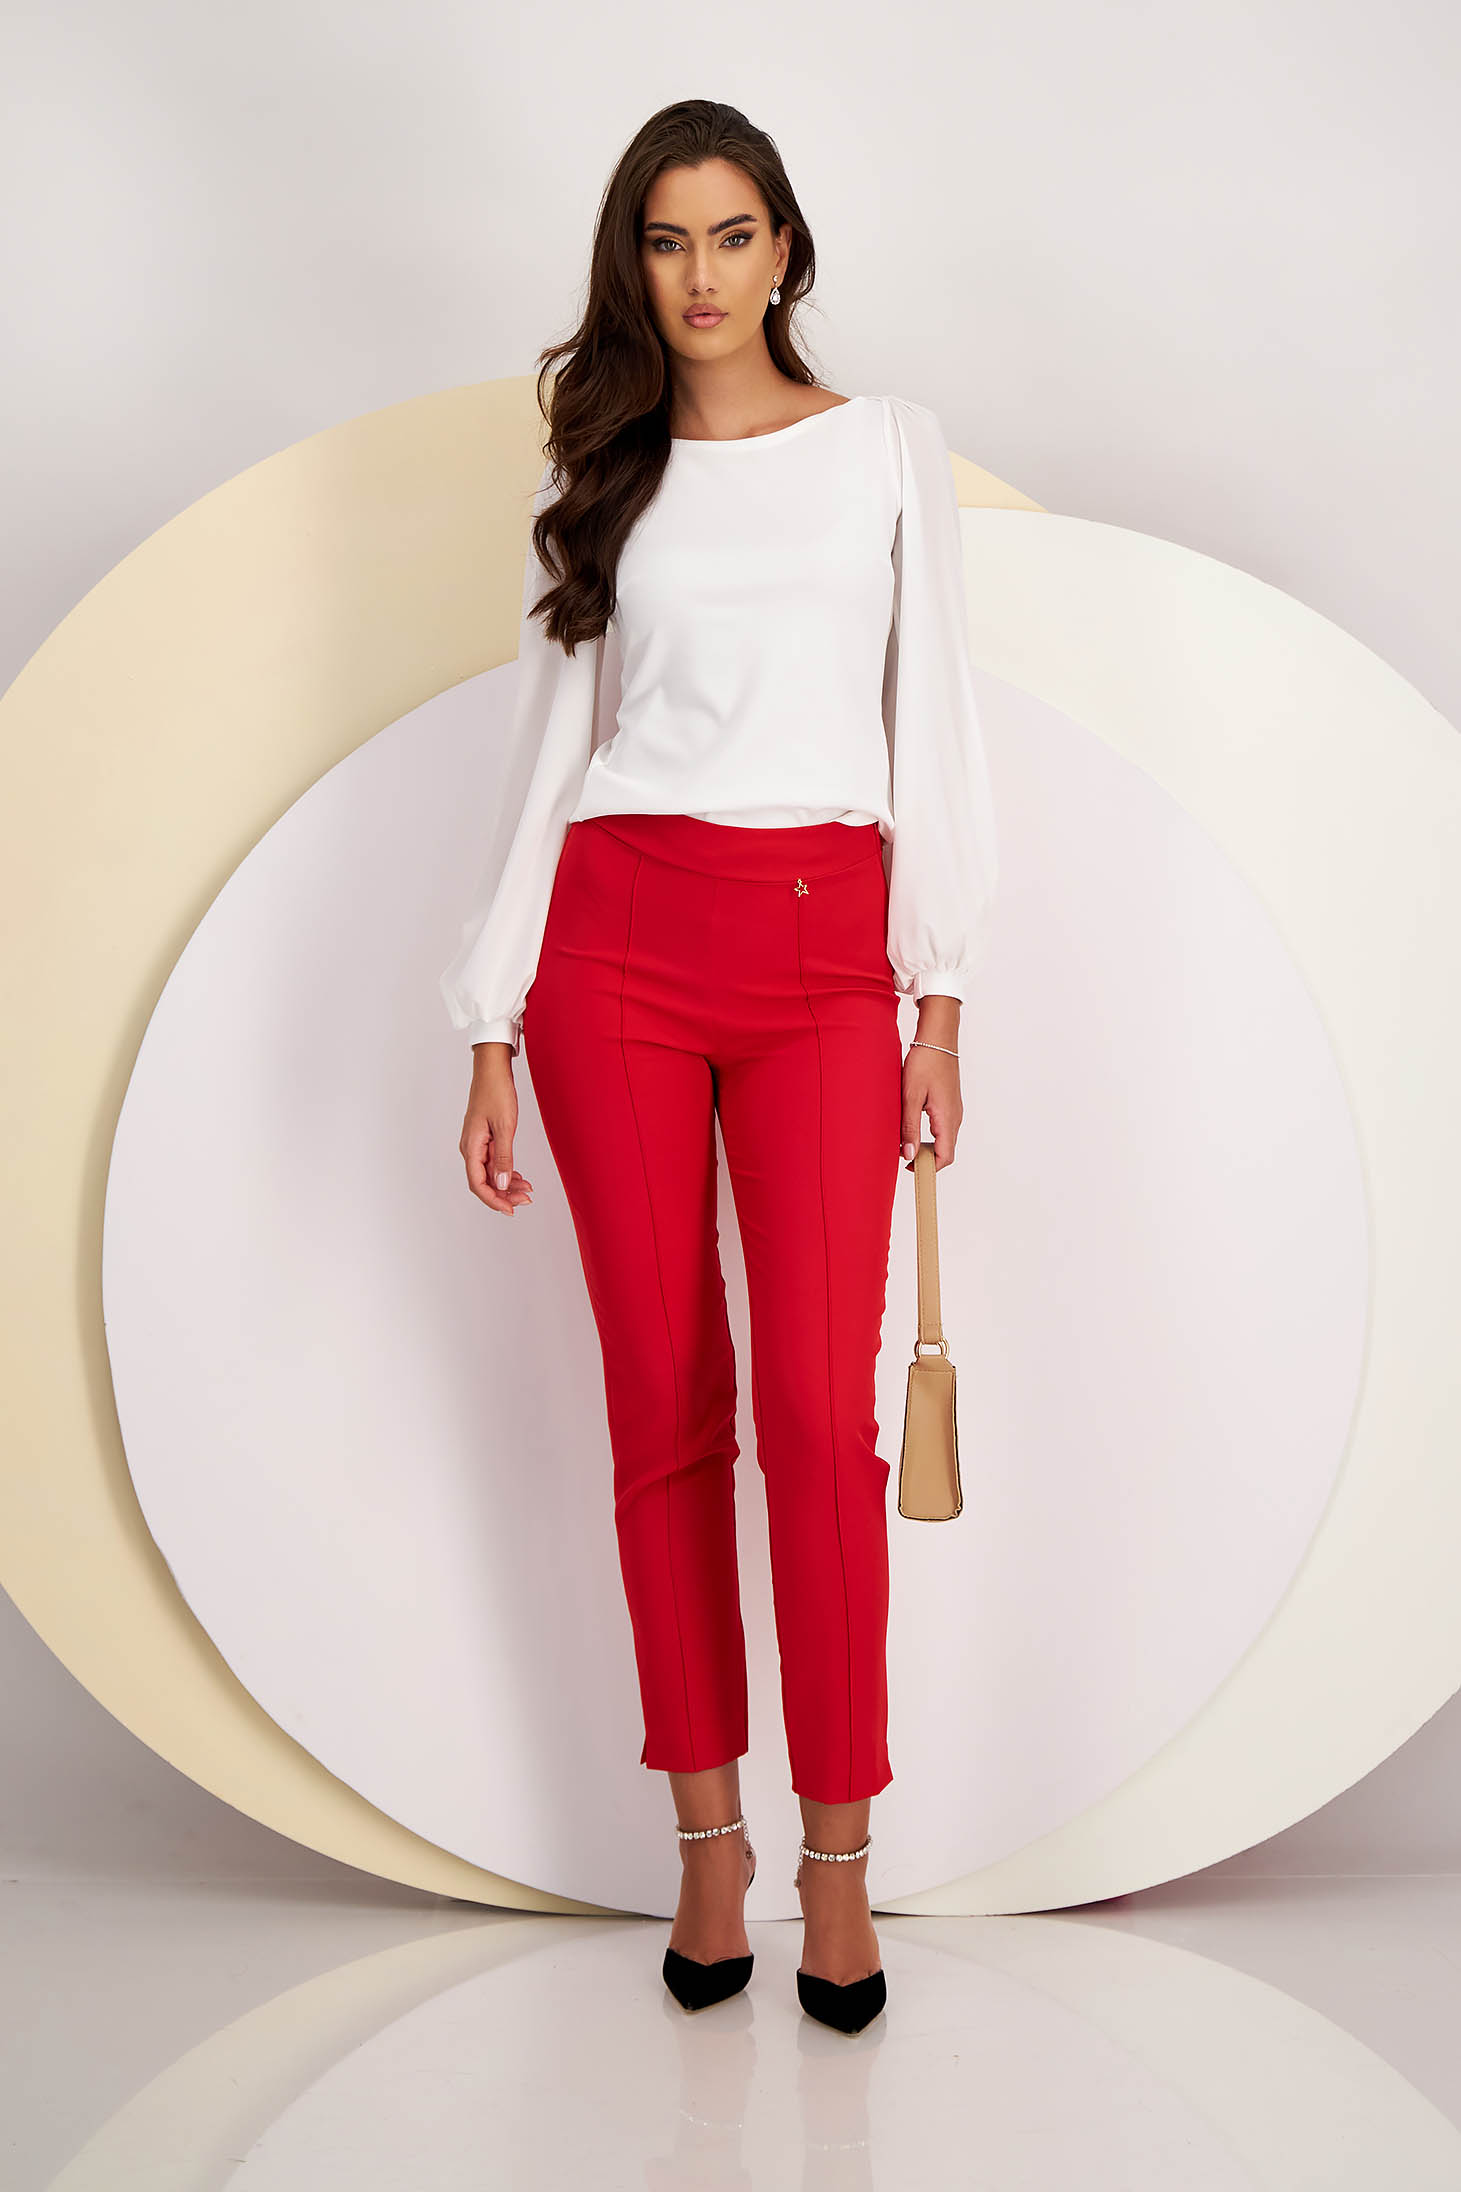 Pantaloni din stofa usor elastica rosii conici cu talie inalta - StarShinerS 3 - StarShinerS.ro